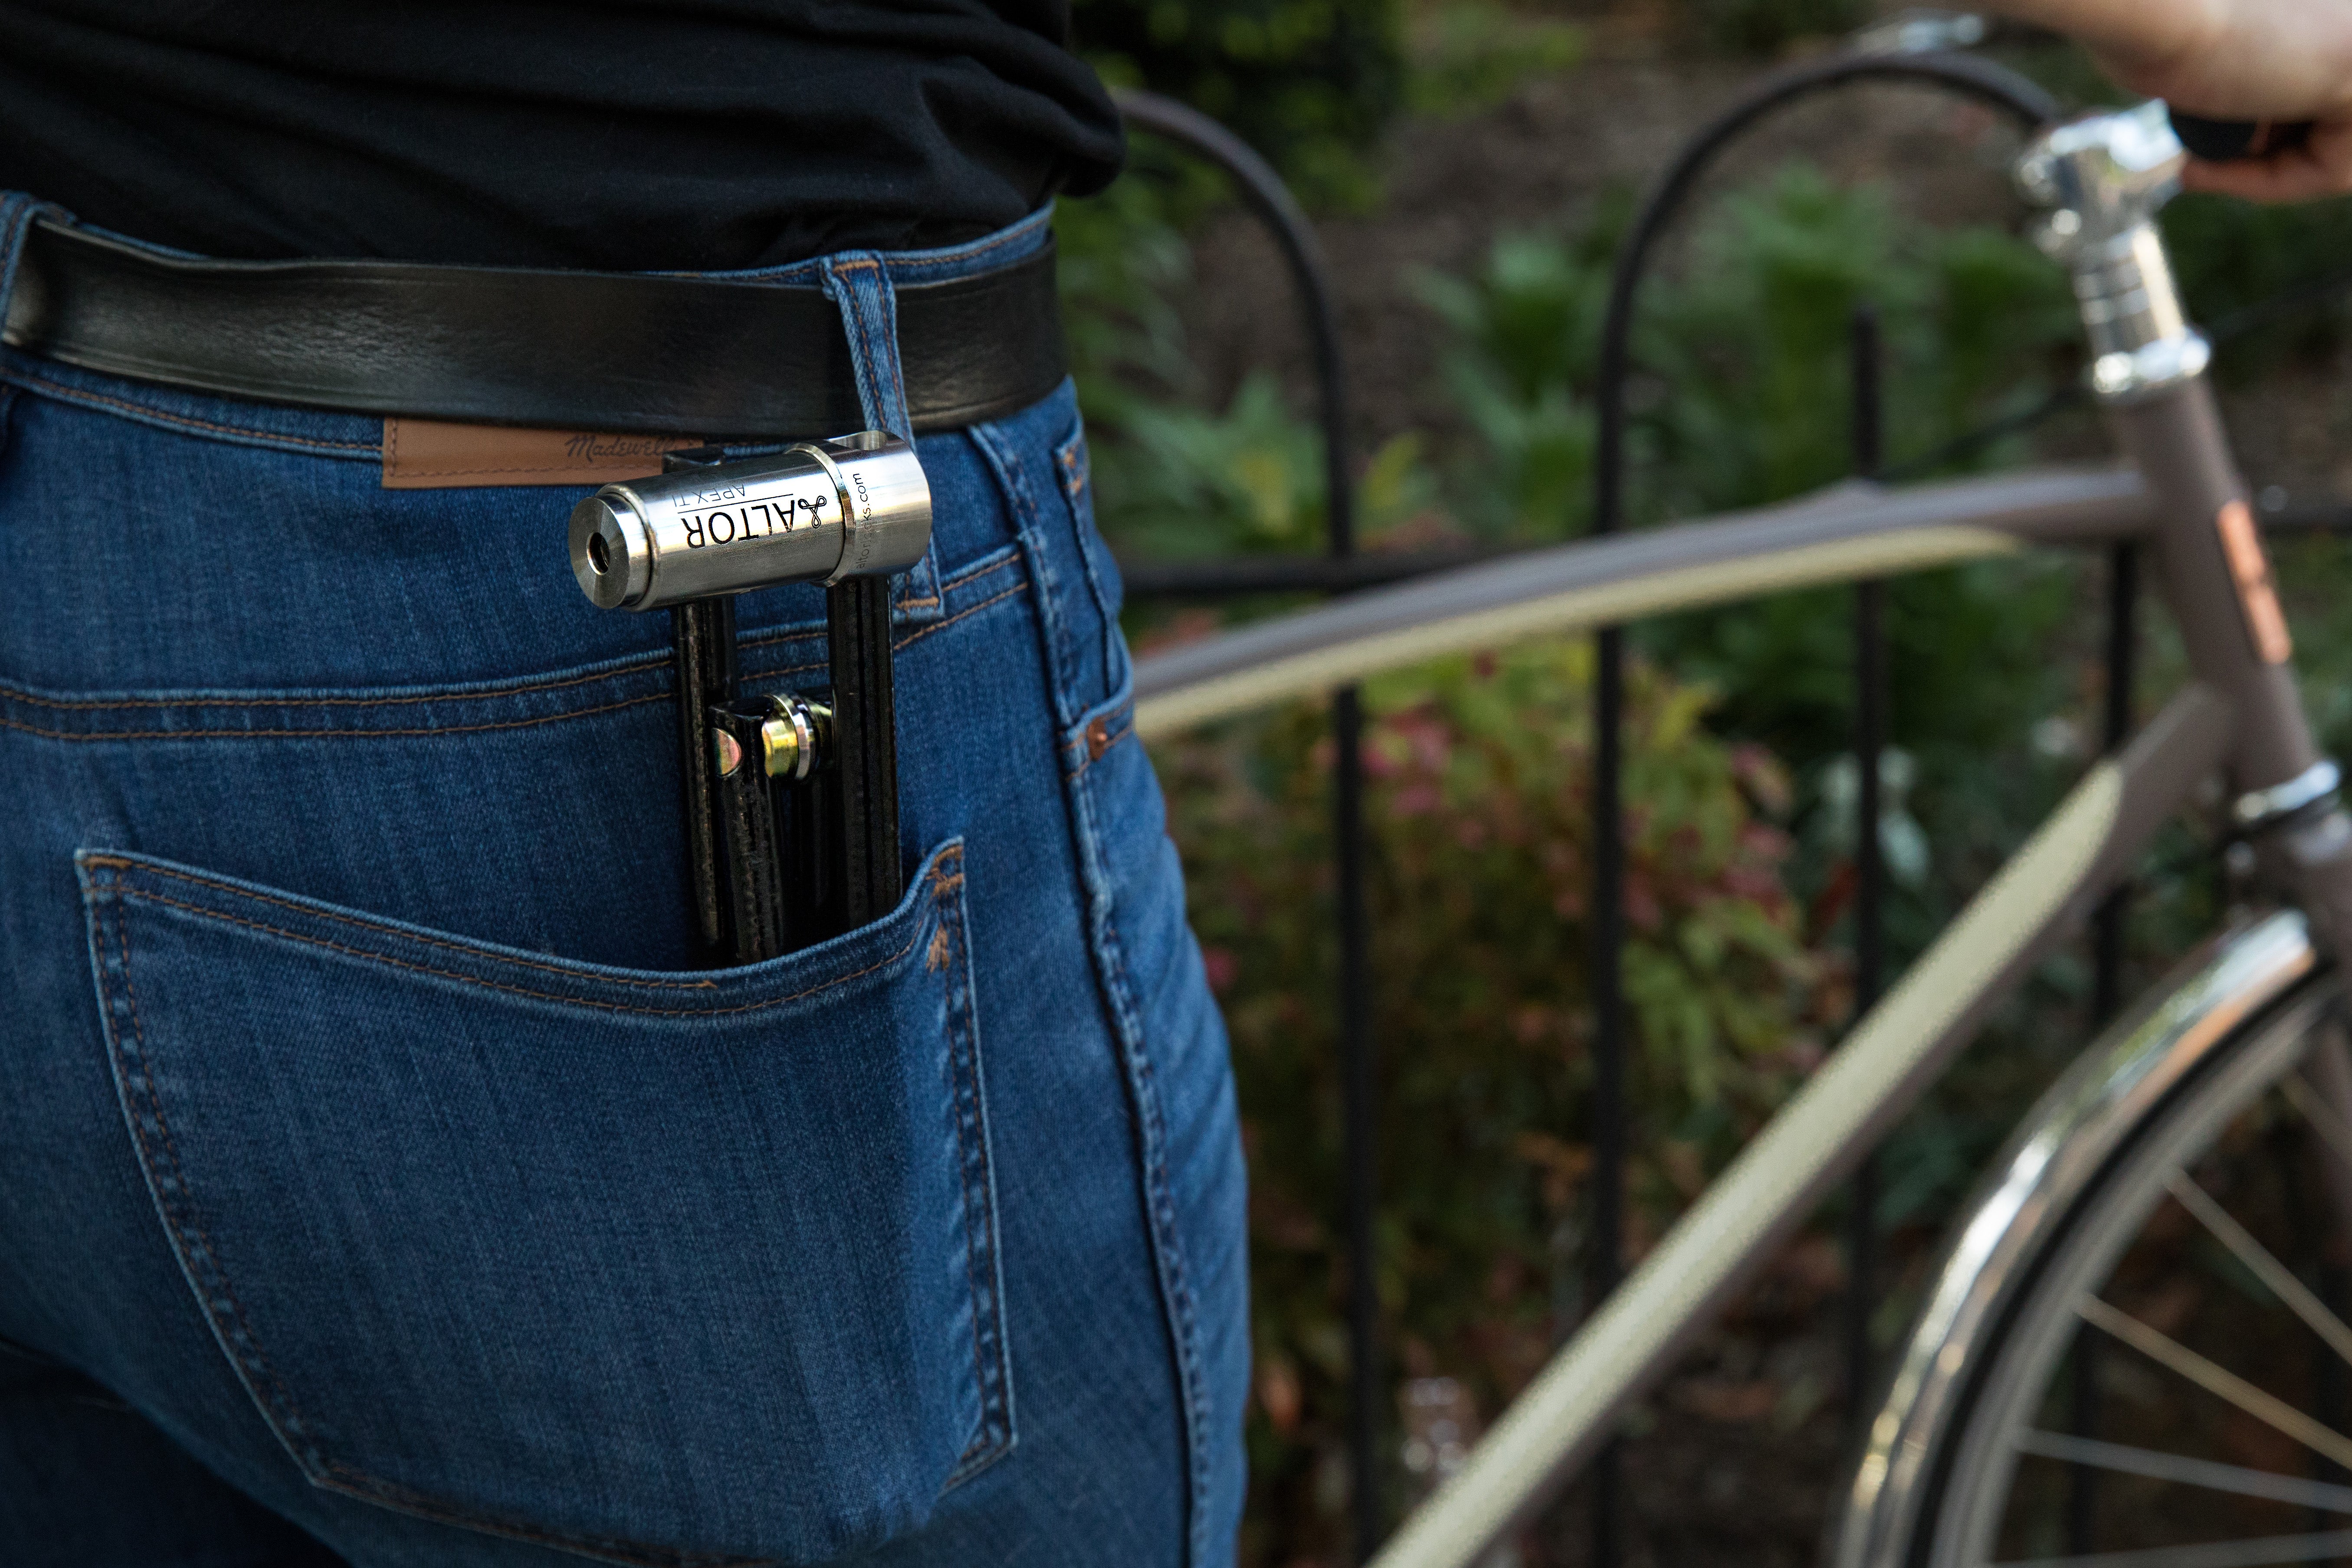 APEX TI - Altor Locks pocket cafe secure lightweight best folding bike lock 